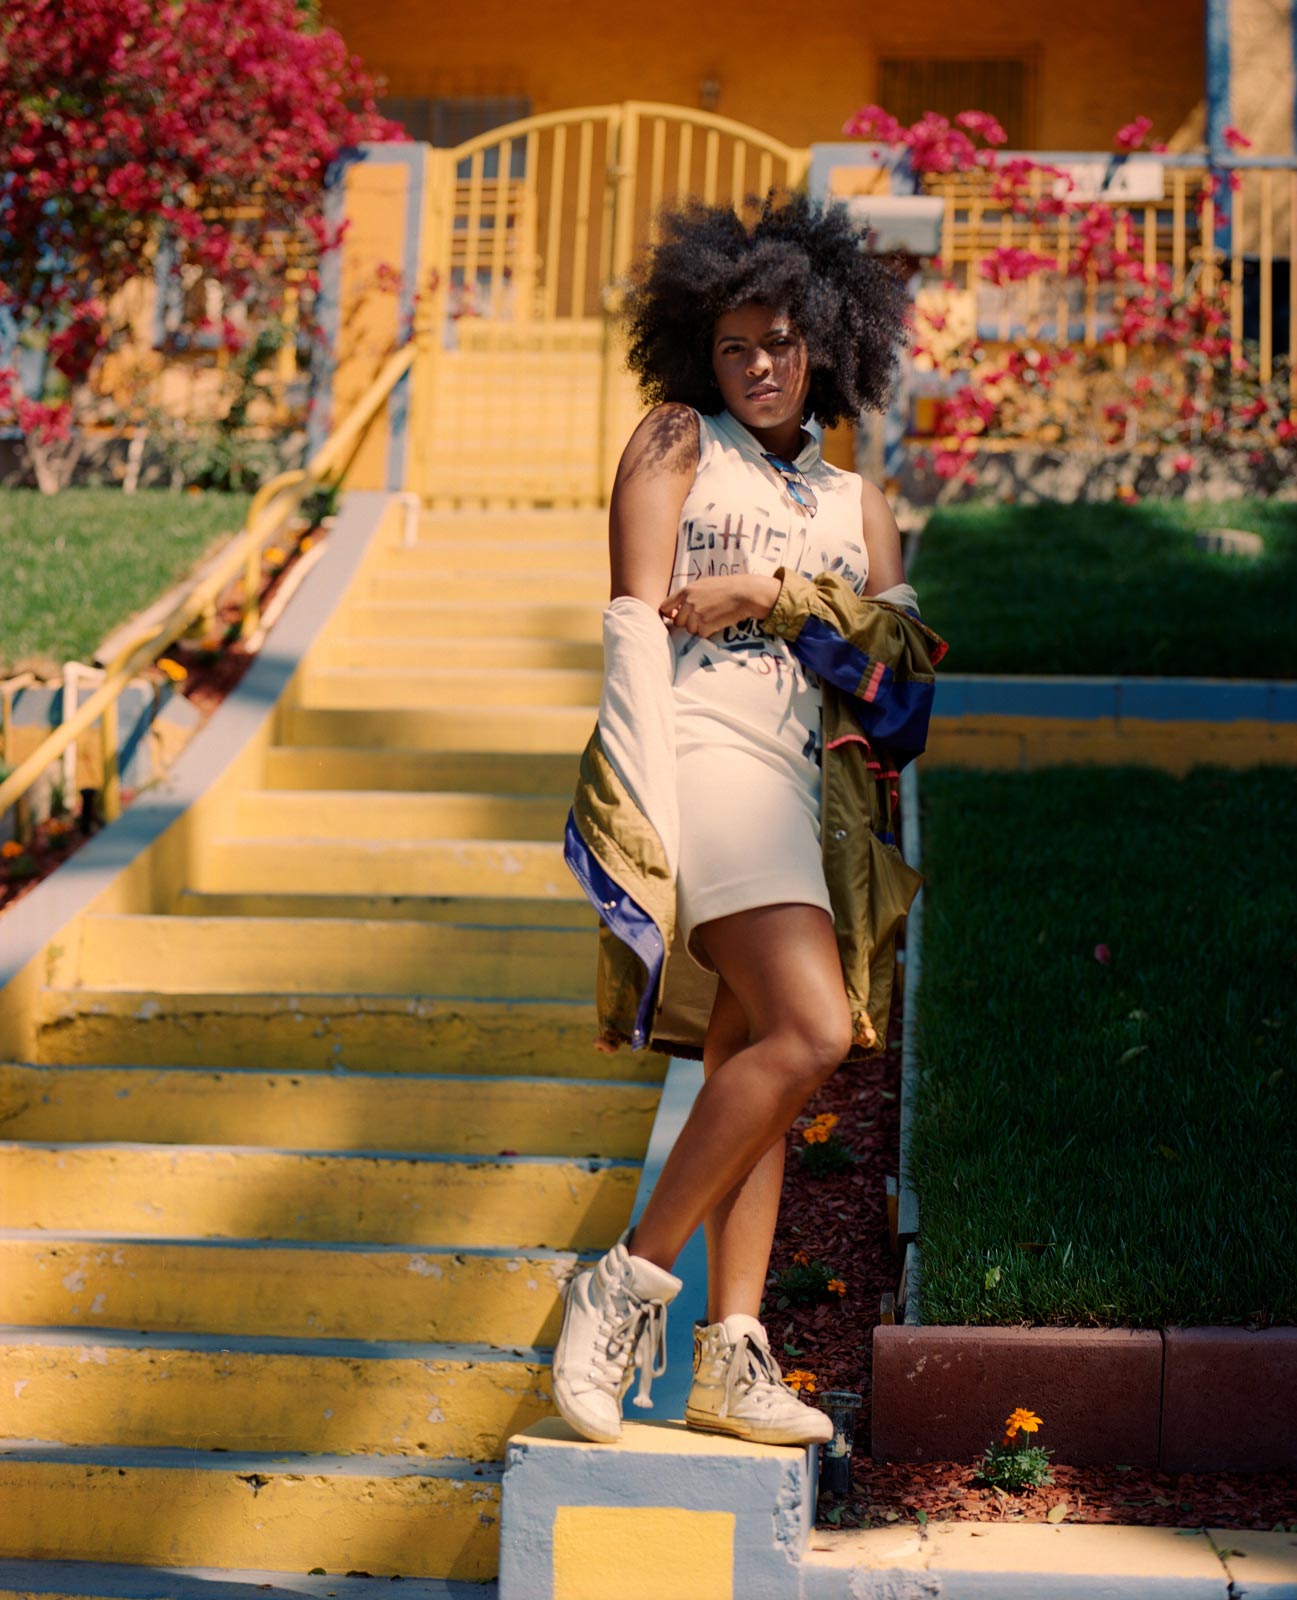 Rebel Rae, Singer, posing infront of yellow house, LA.